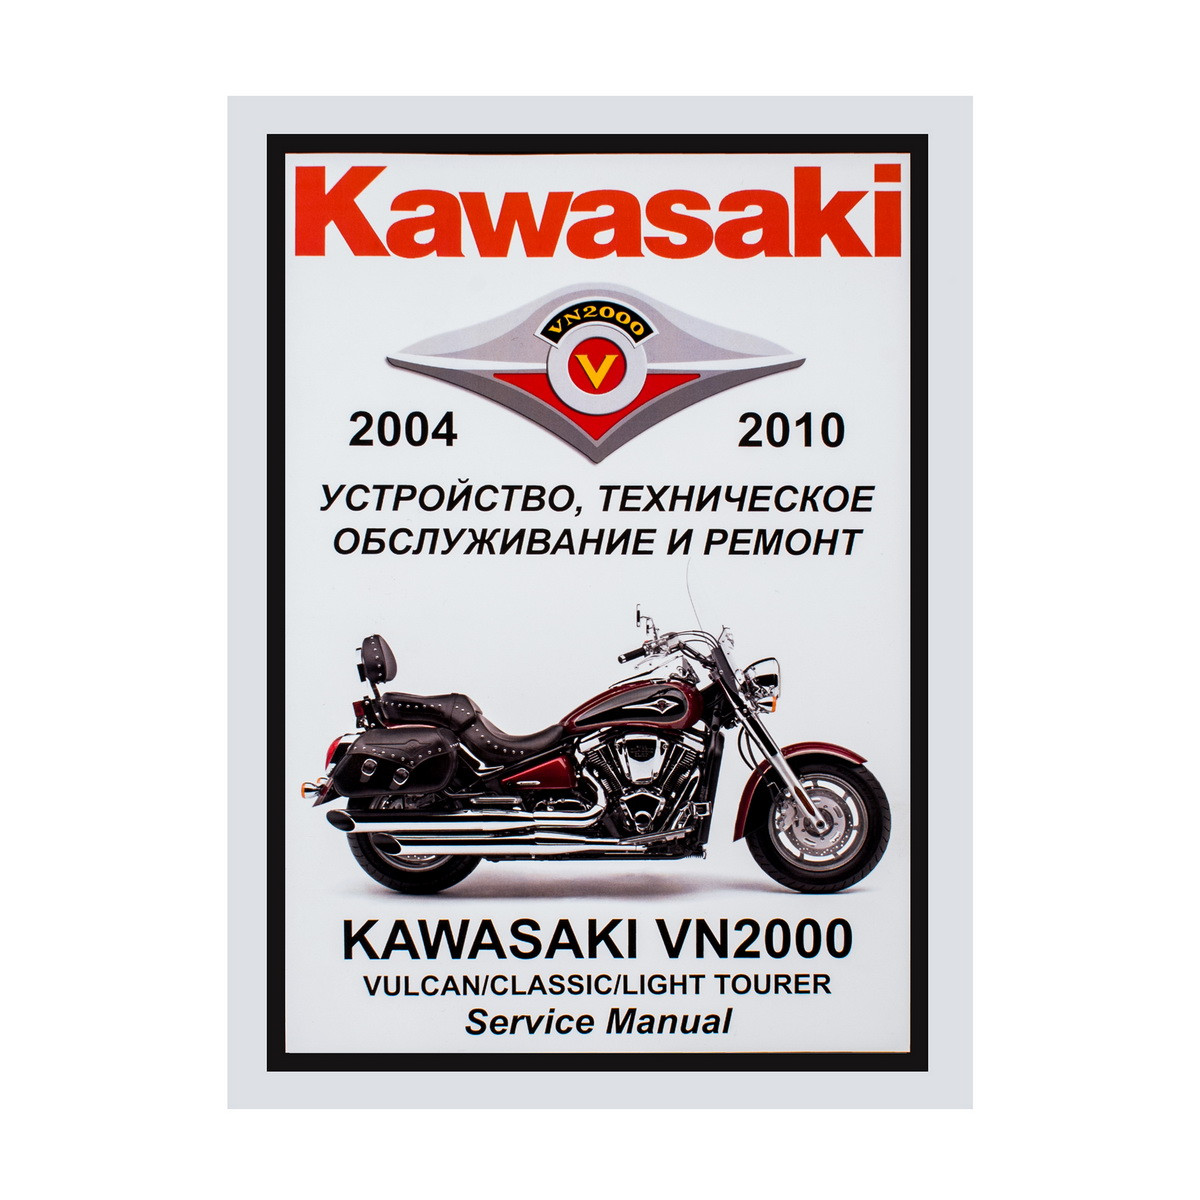 Мануалы и документация для Kawasaki VN850 Vulcan